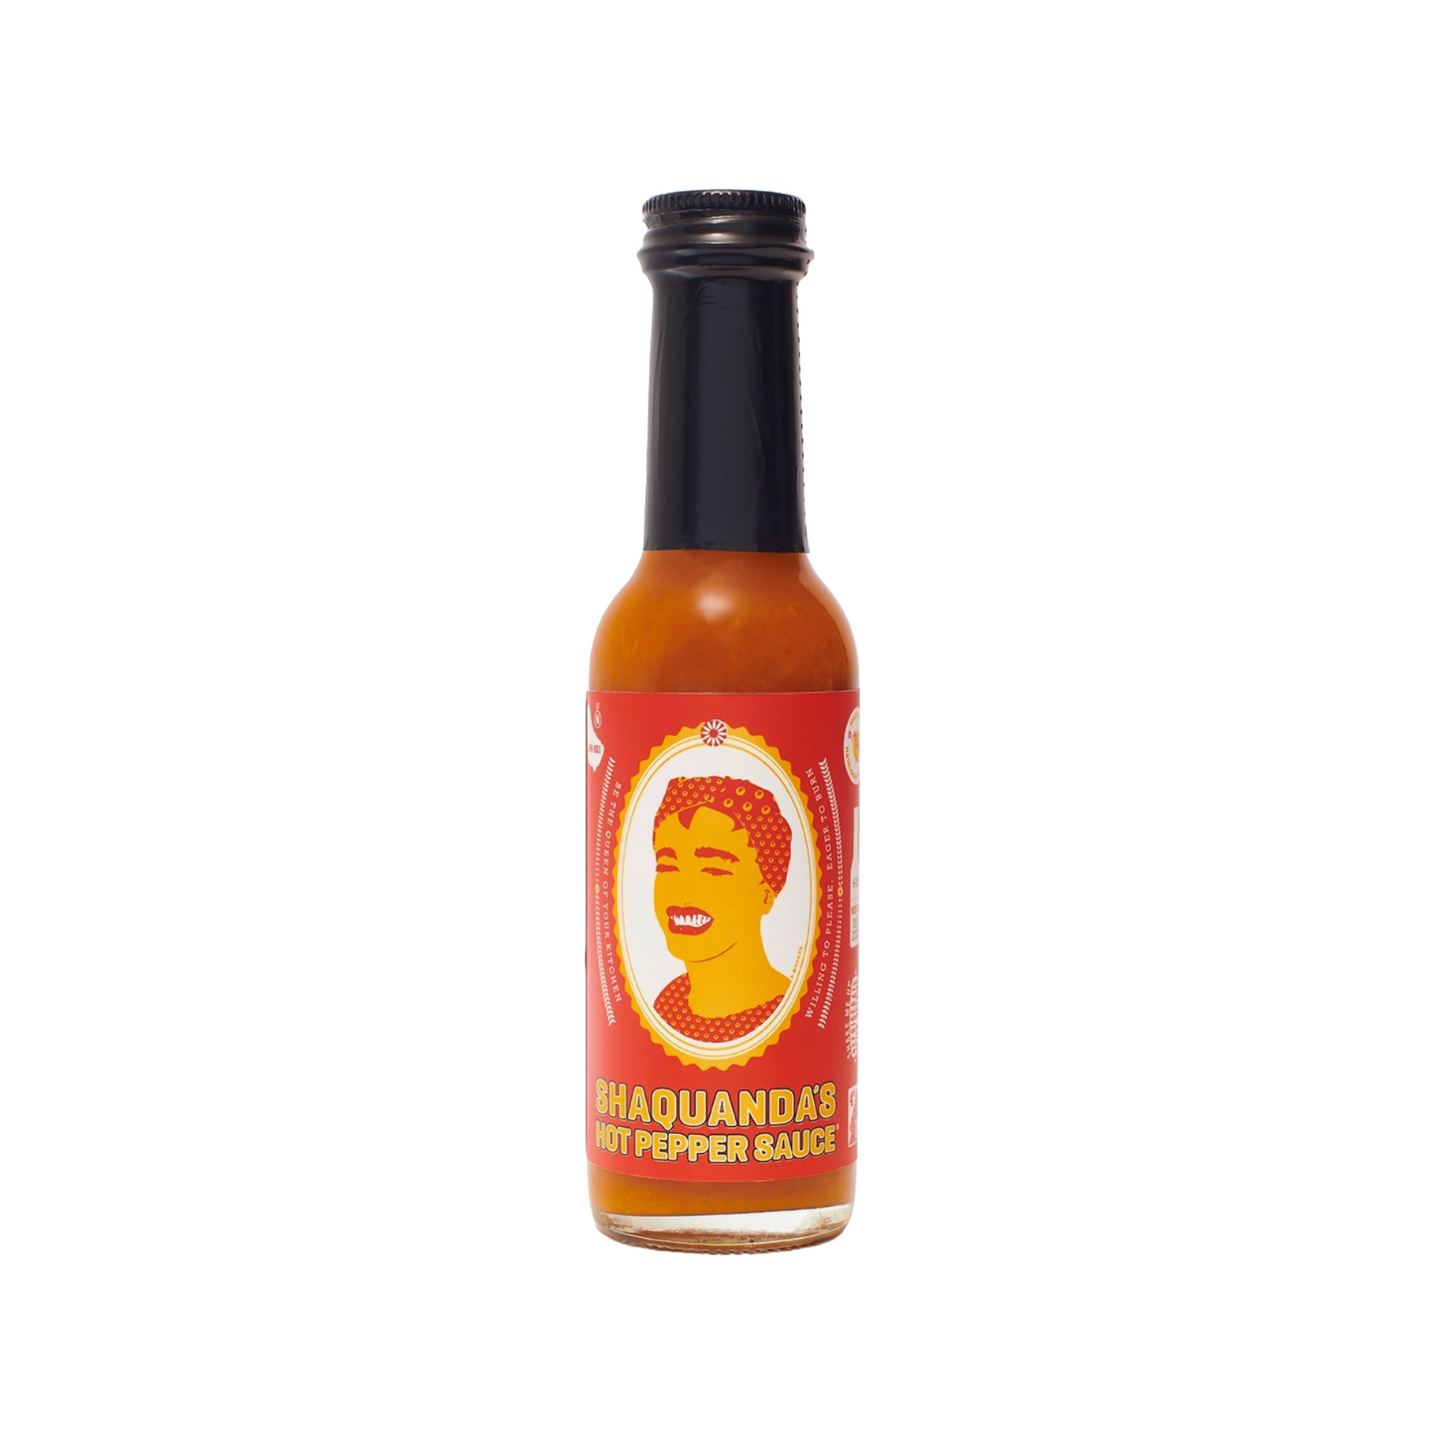 Hot Pepper Sauce by Shaquanda's